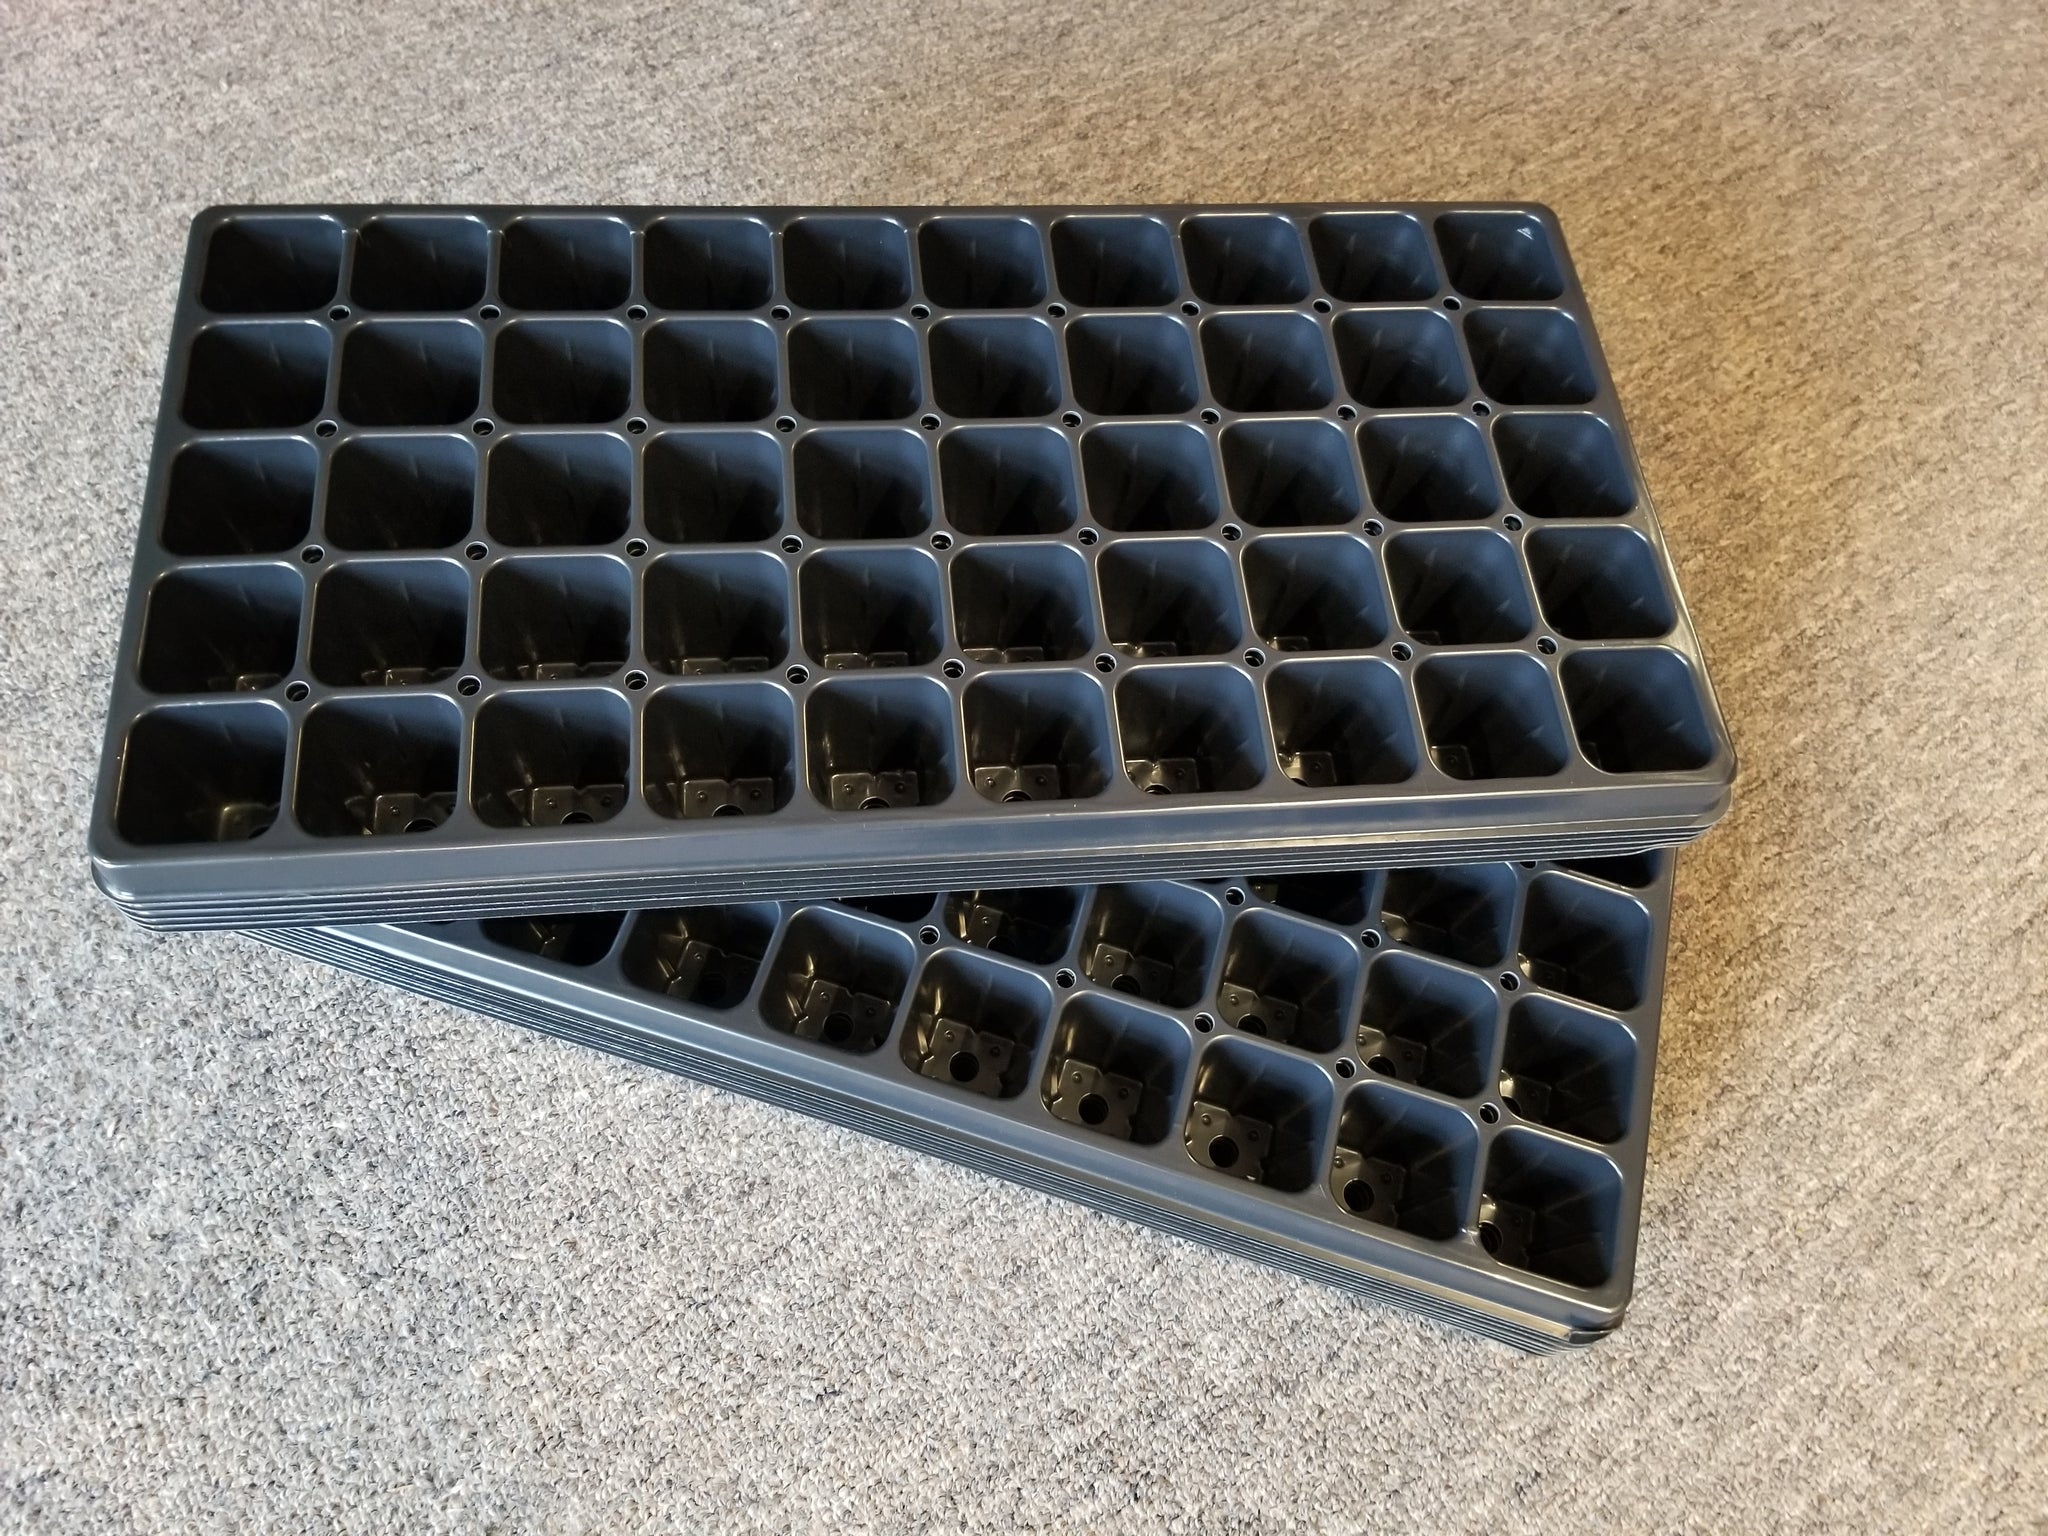 50 cell tray, 5x10